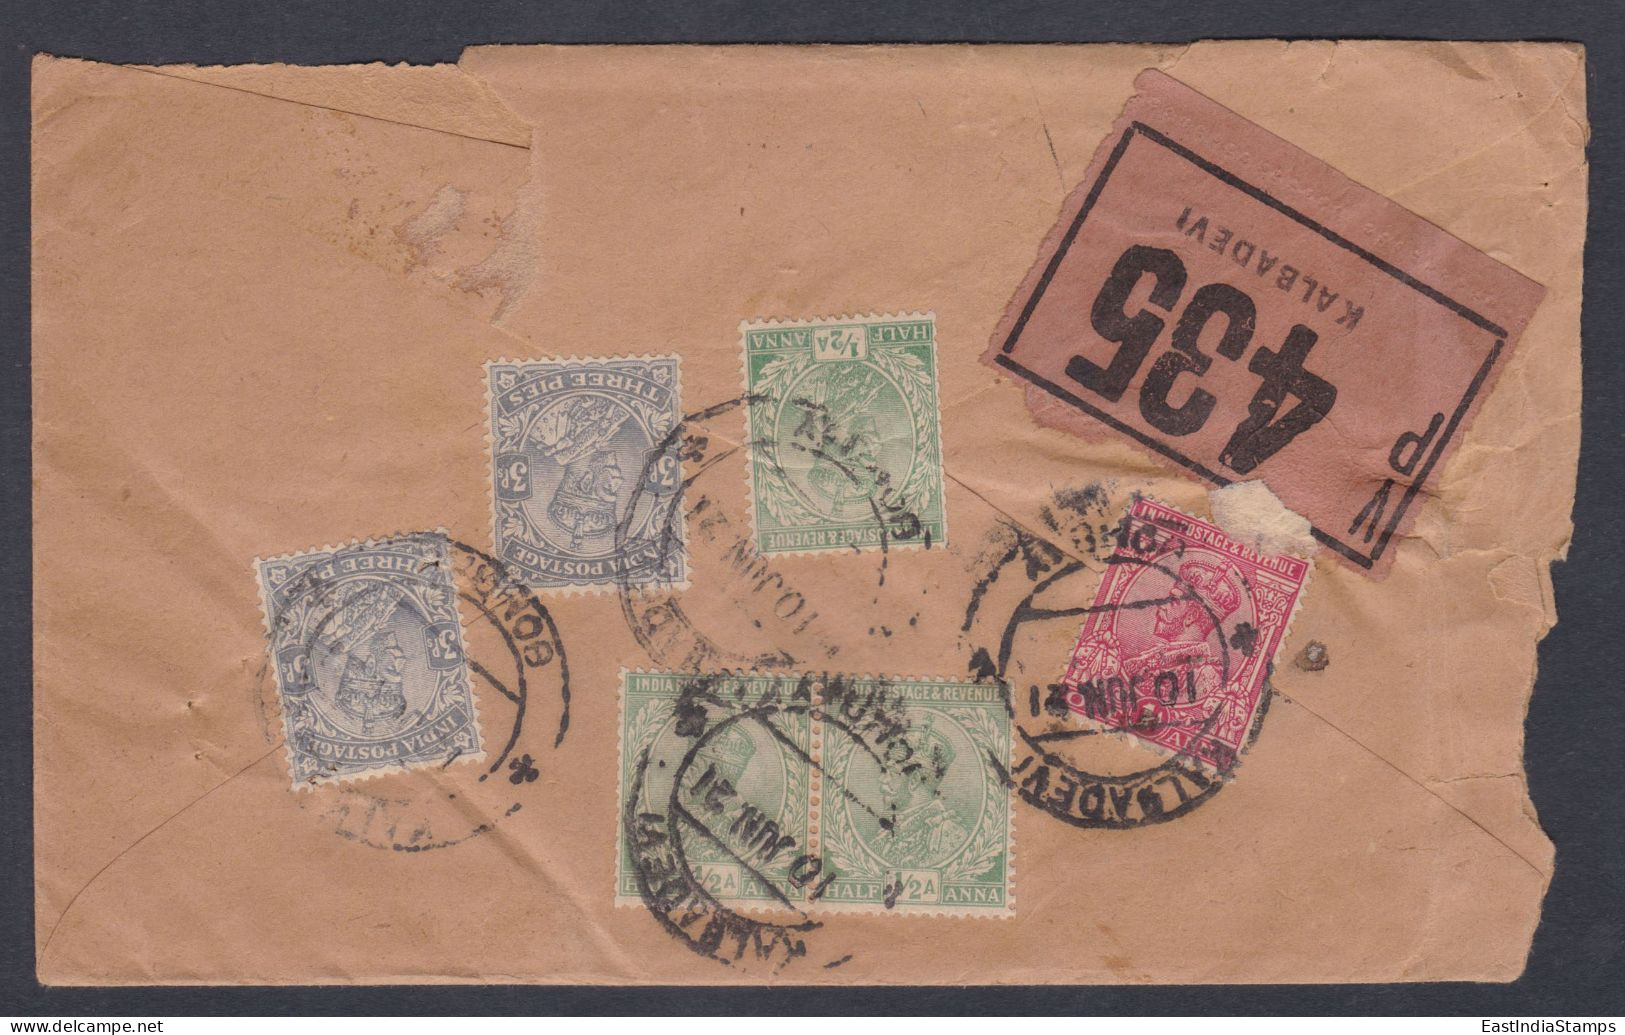 Inde British India 1921 Used Registered WIndow Cover VP Label, Value Payable, King George V Stamps - 1911-35 King George V